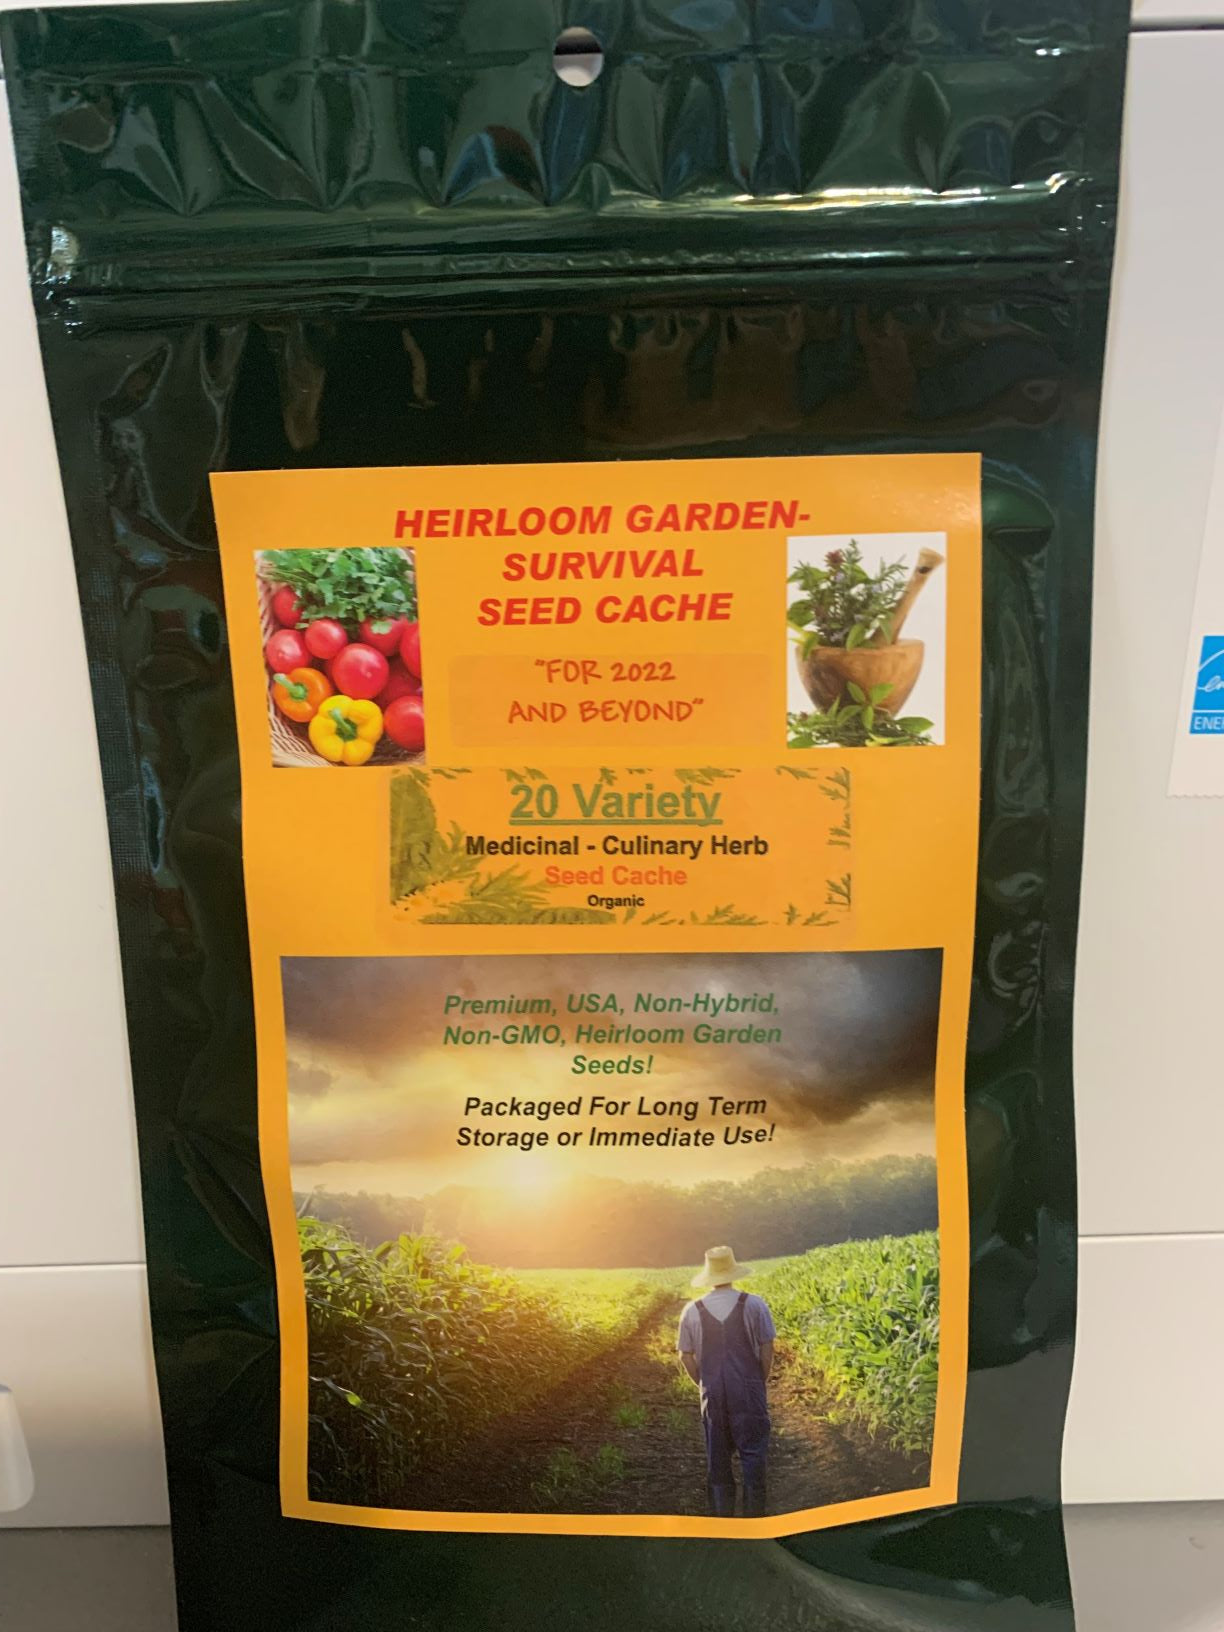 300,000 Garden /Survival Emergency Vegetable Seeds + 20 Variety Herb Seed Cache